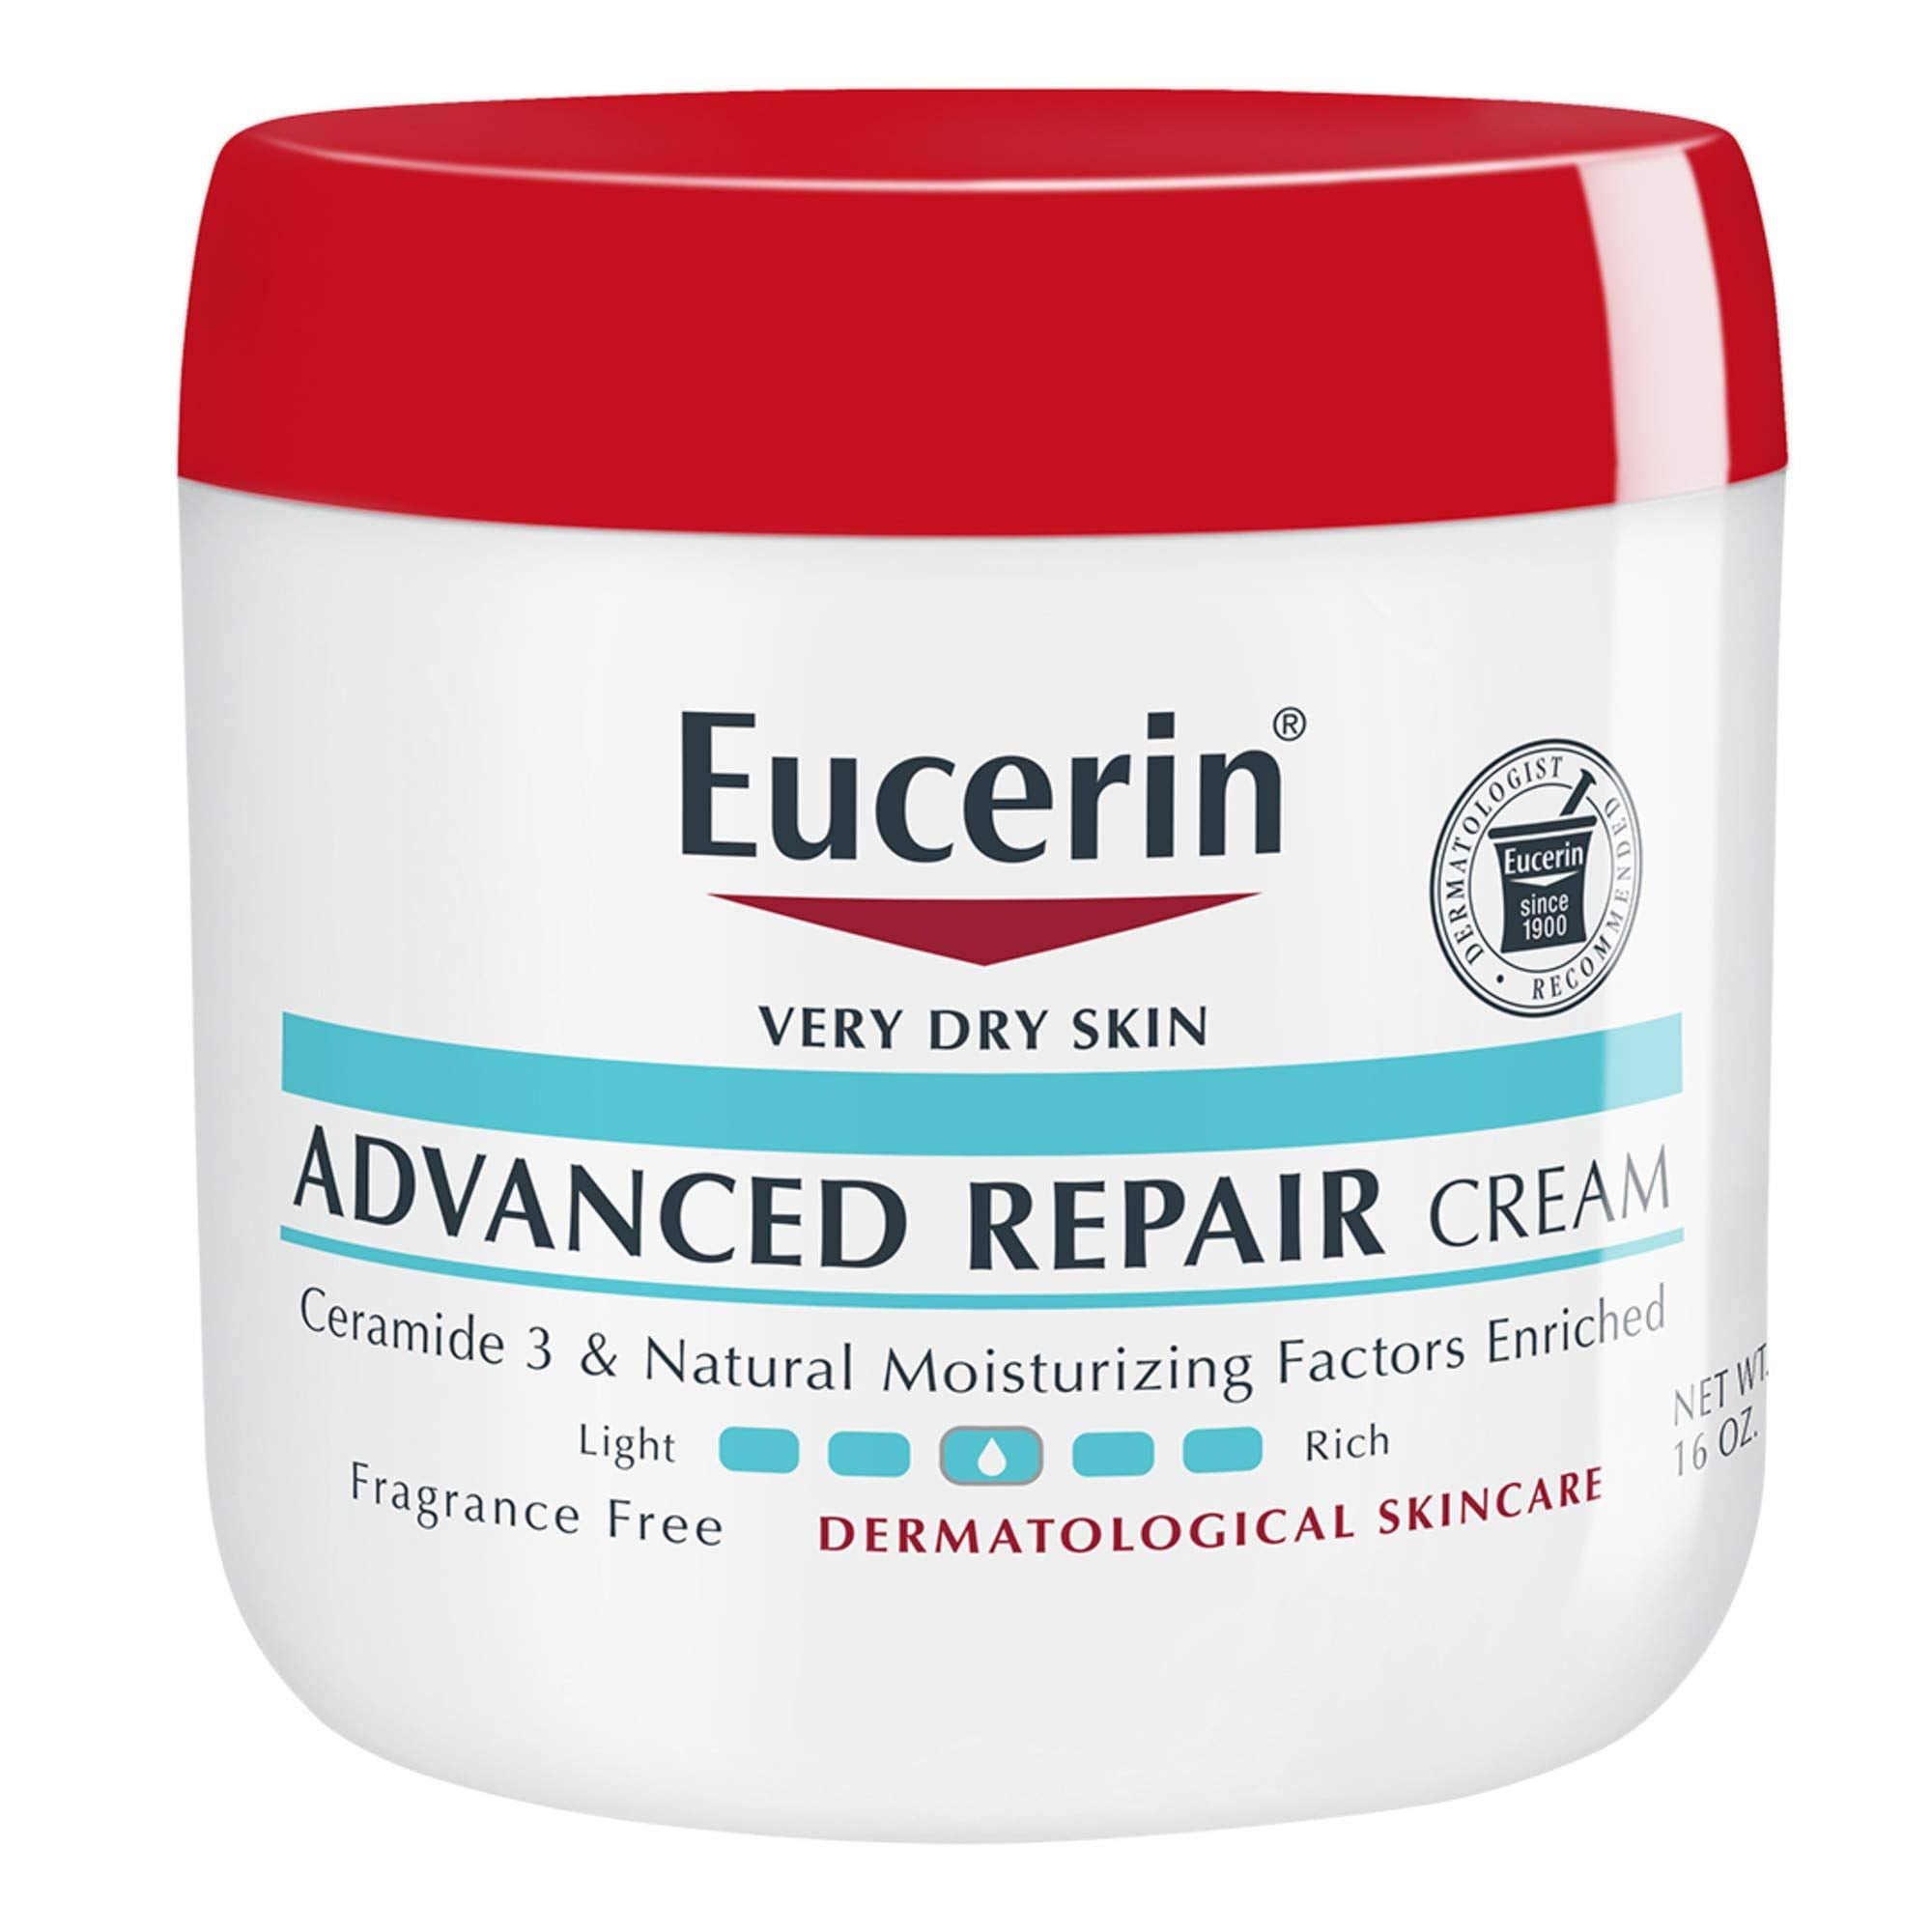 Eucerin Advanced Repair Creme - 16oz